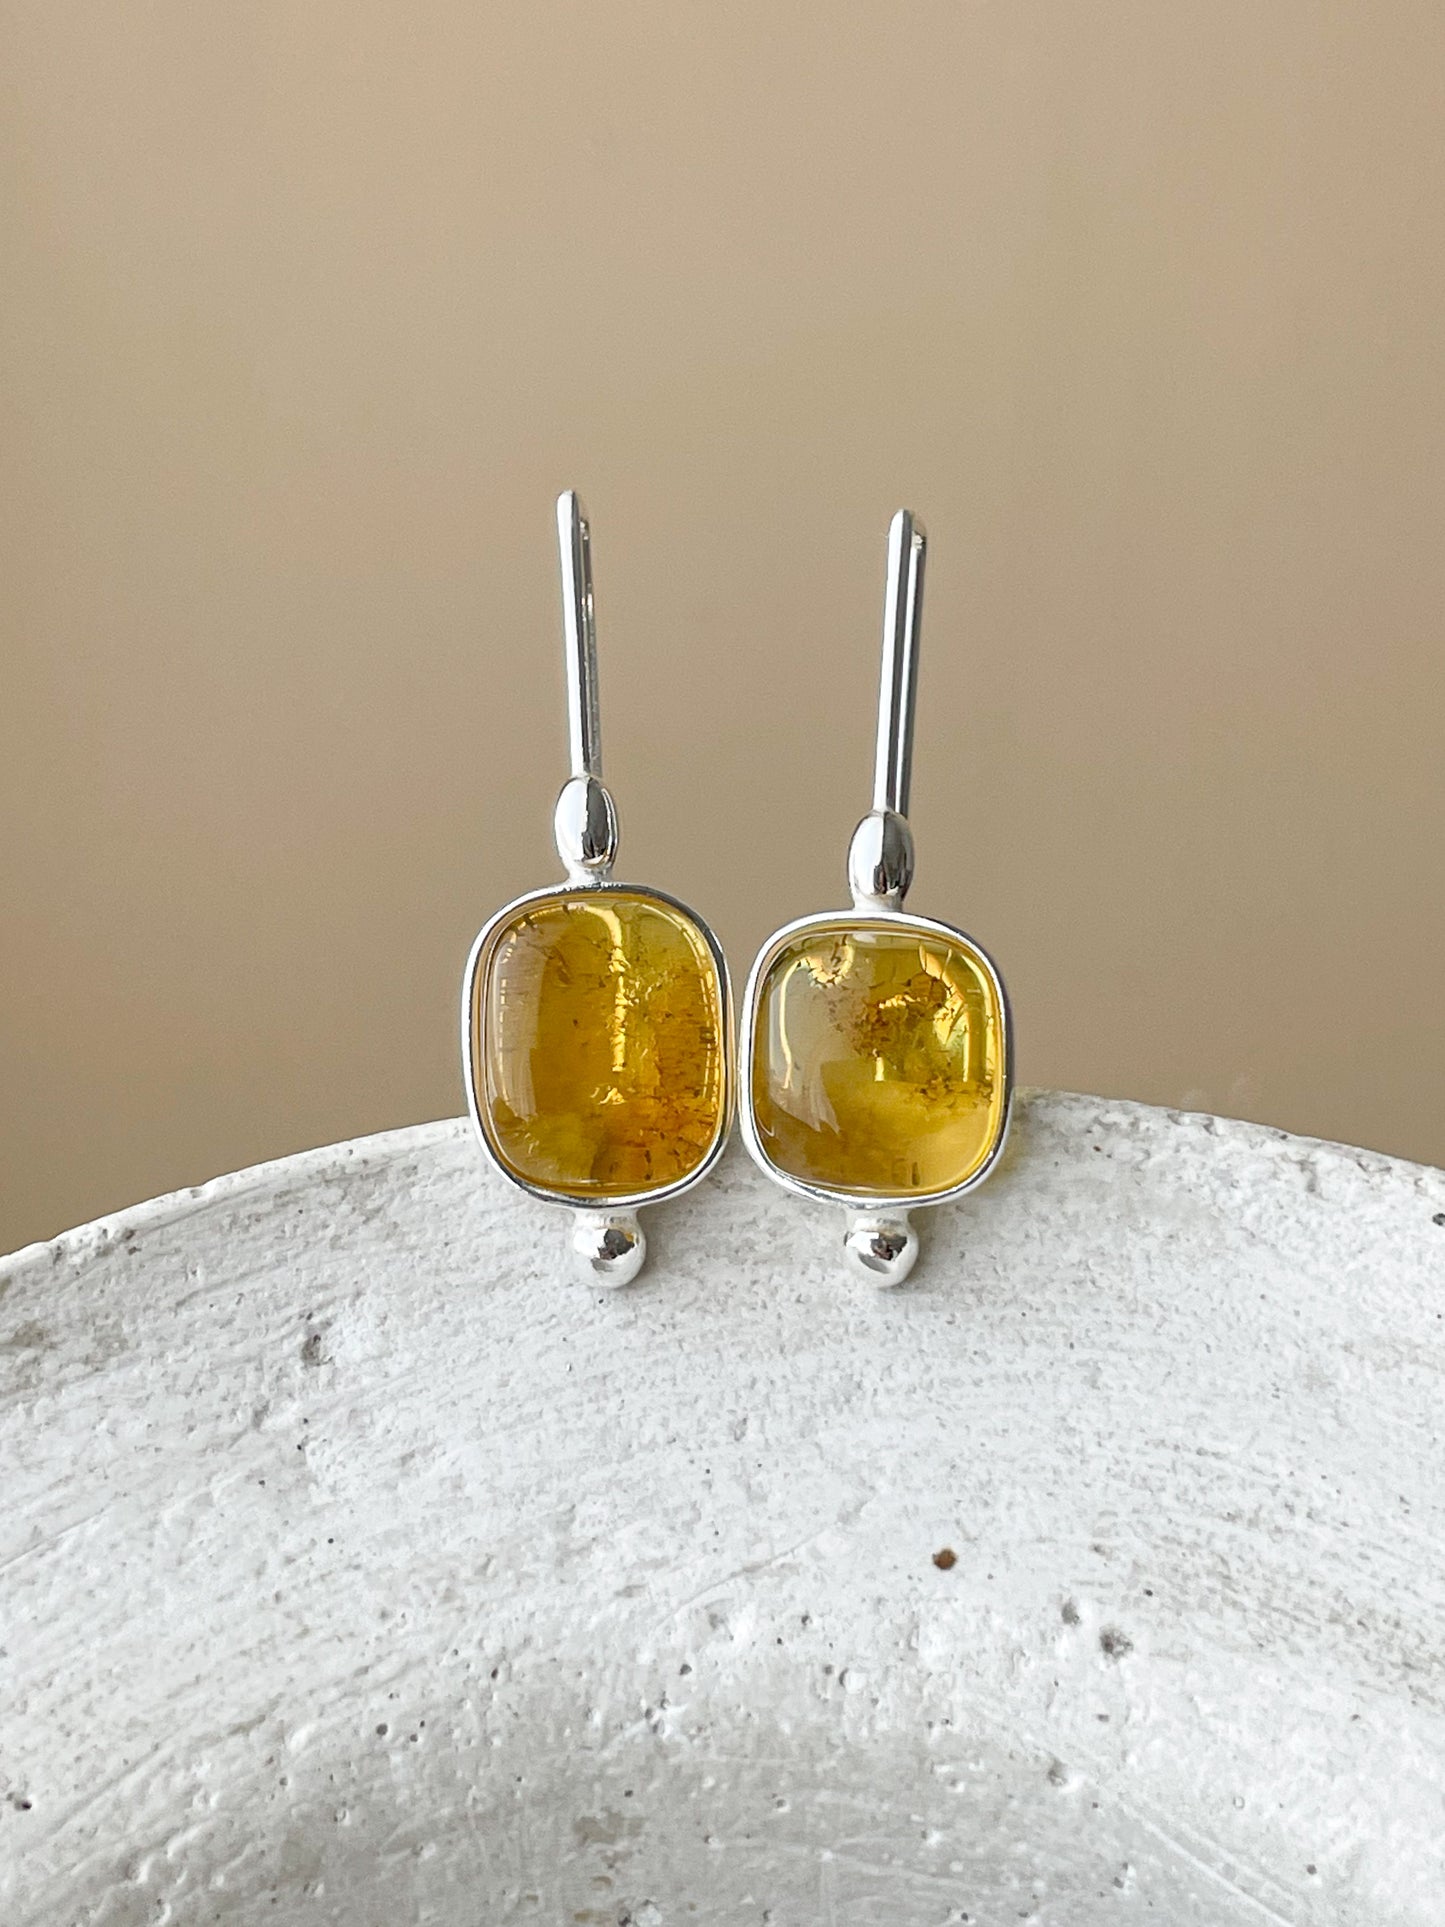 Honey amber dangle earrings - Sterling silver - Hook earrings collection